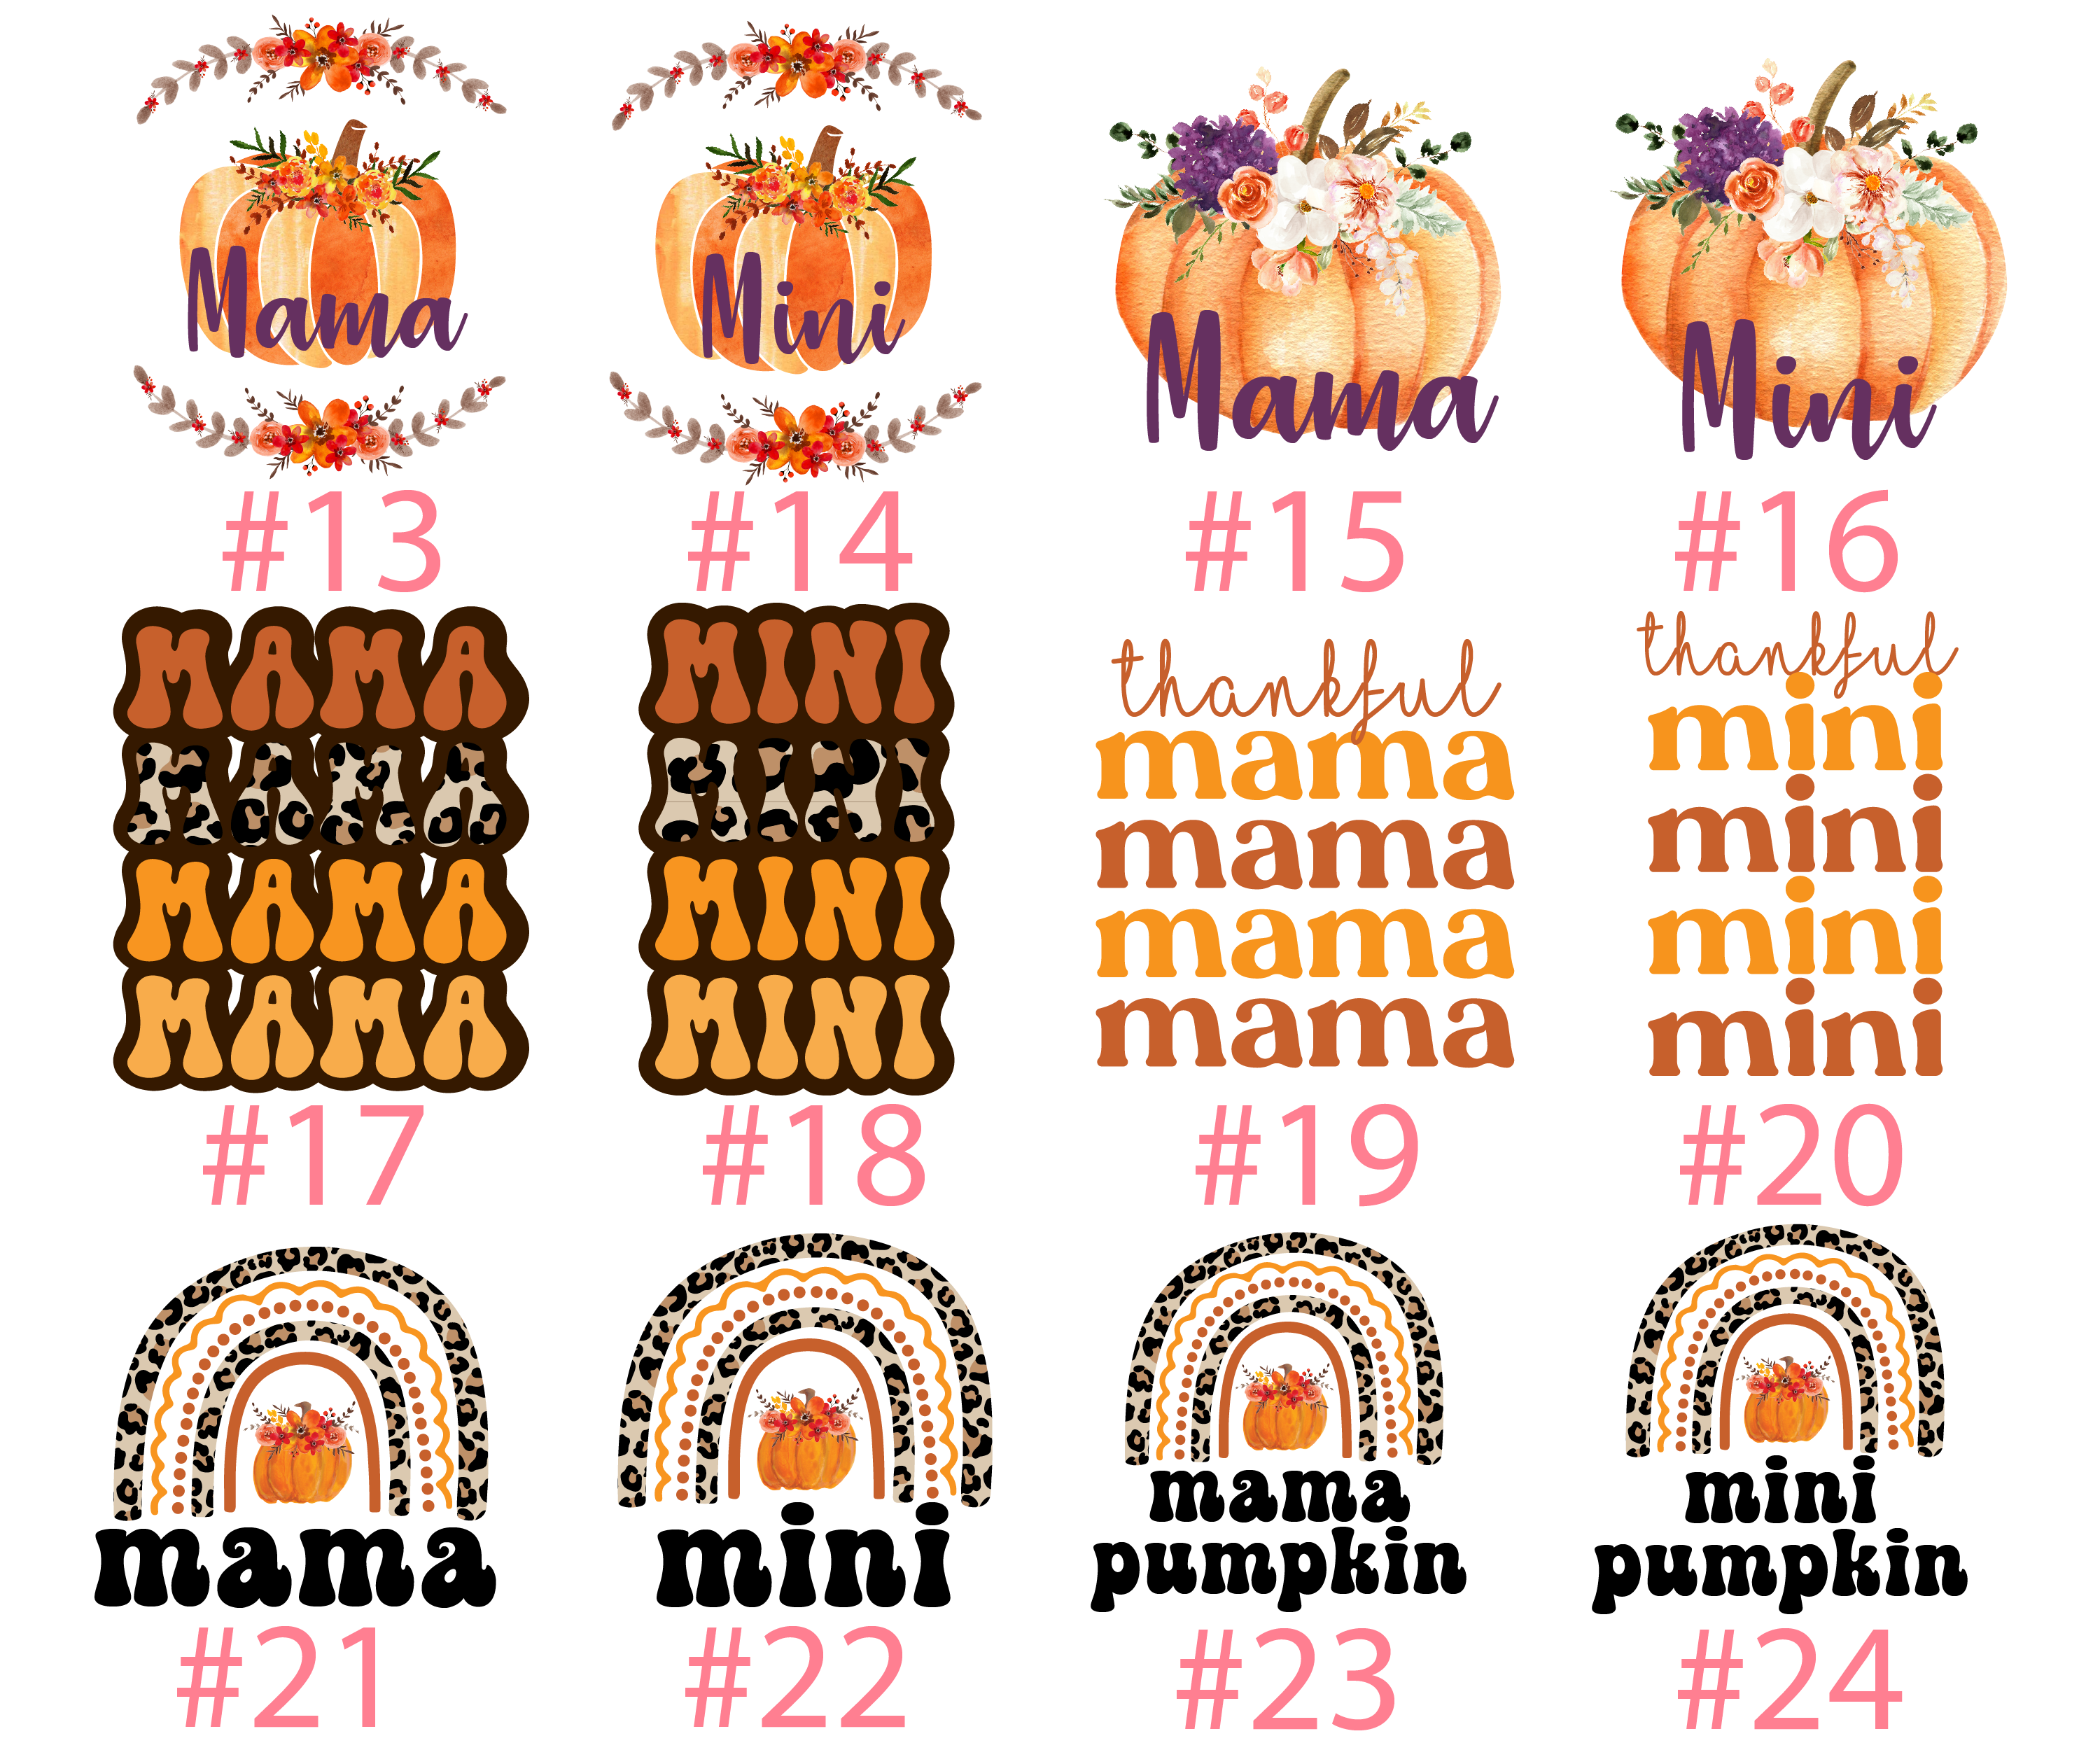 Mama Mini Fall Pumpkin Vibes Matching Tees